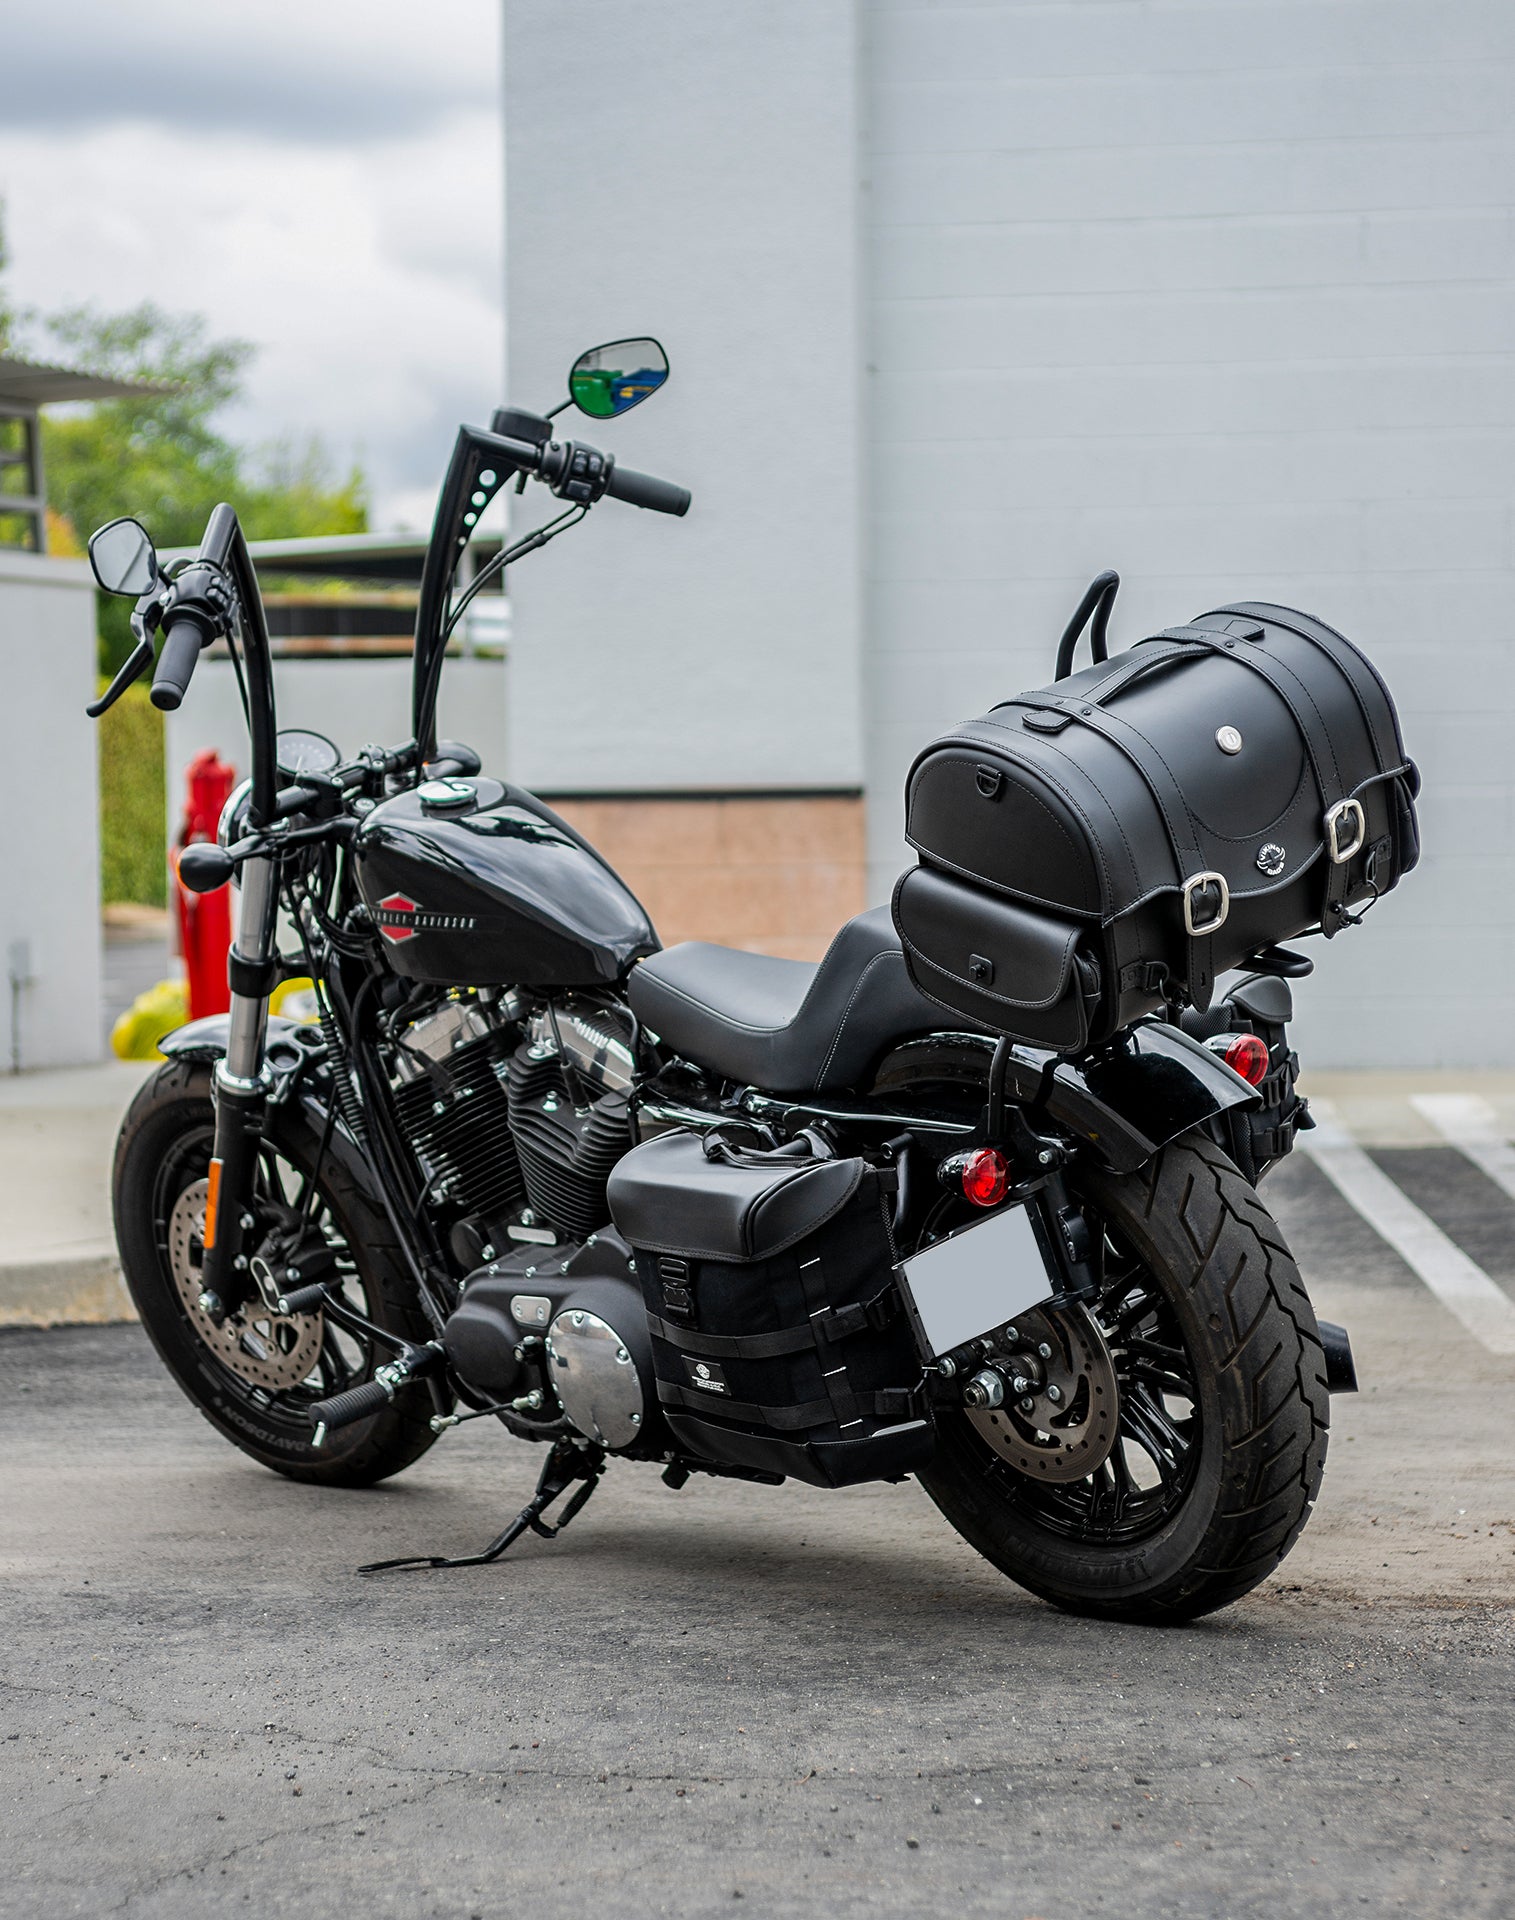 18L - Century Medium Leather Motorcycle Trunk Bag